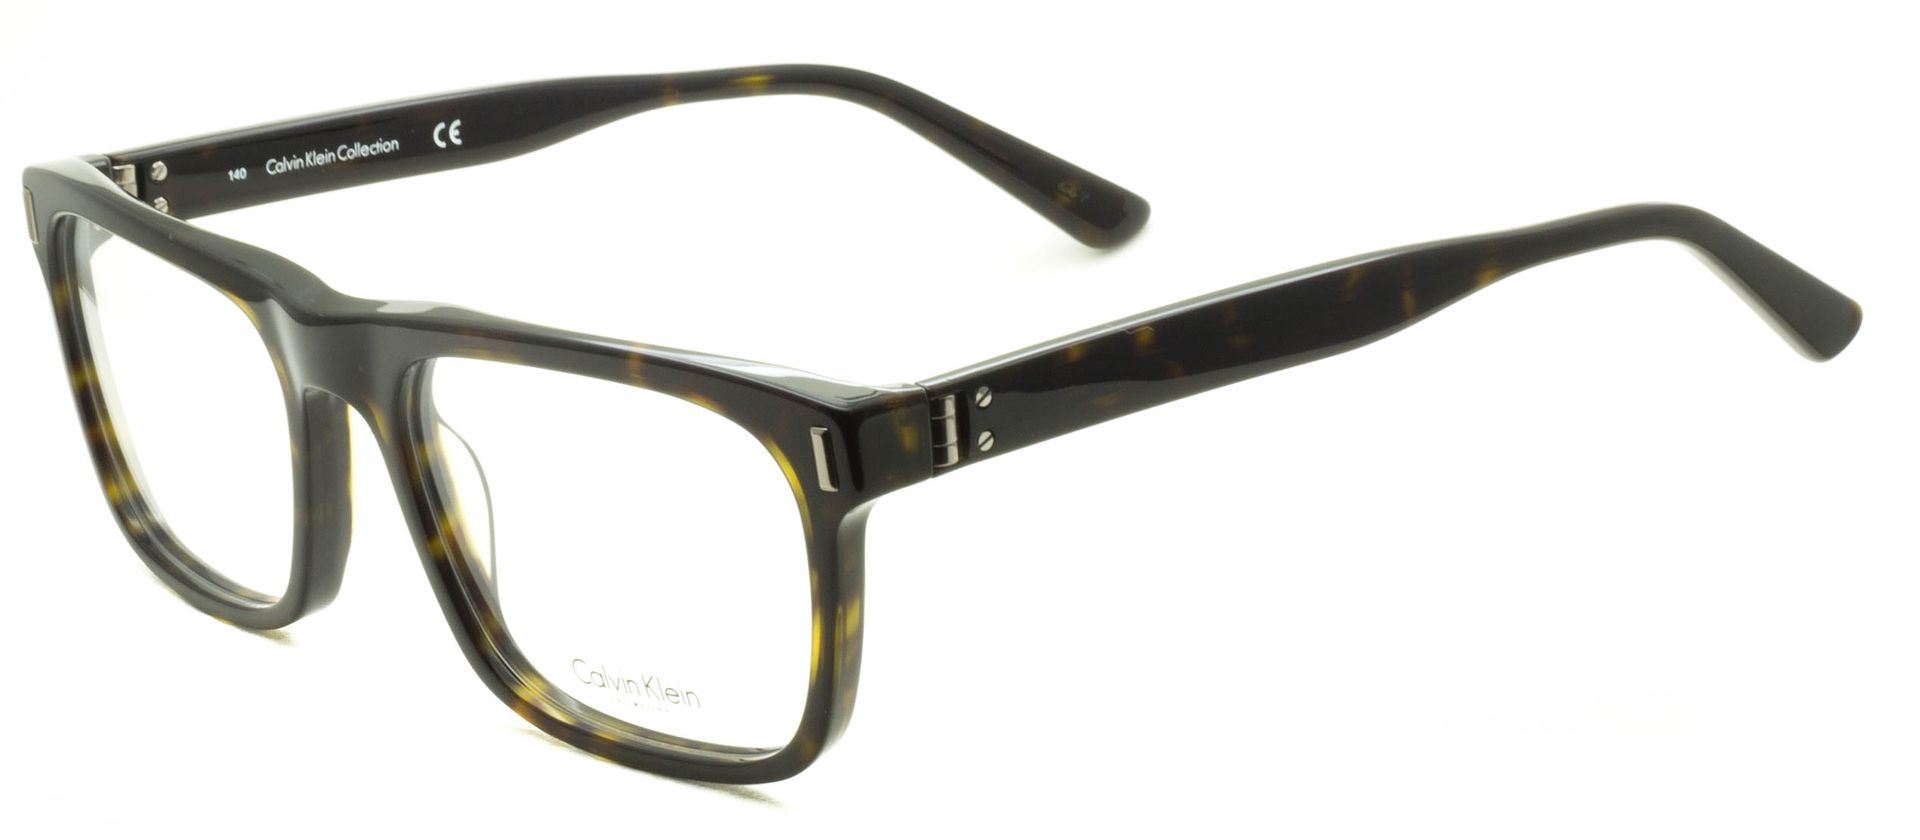 CALVIN KLEIN CK 8525 214 54mm Eyewear FRAMES RX Optical Eyeglasses Glasses  - New - GGV Eyewear